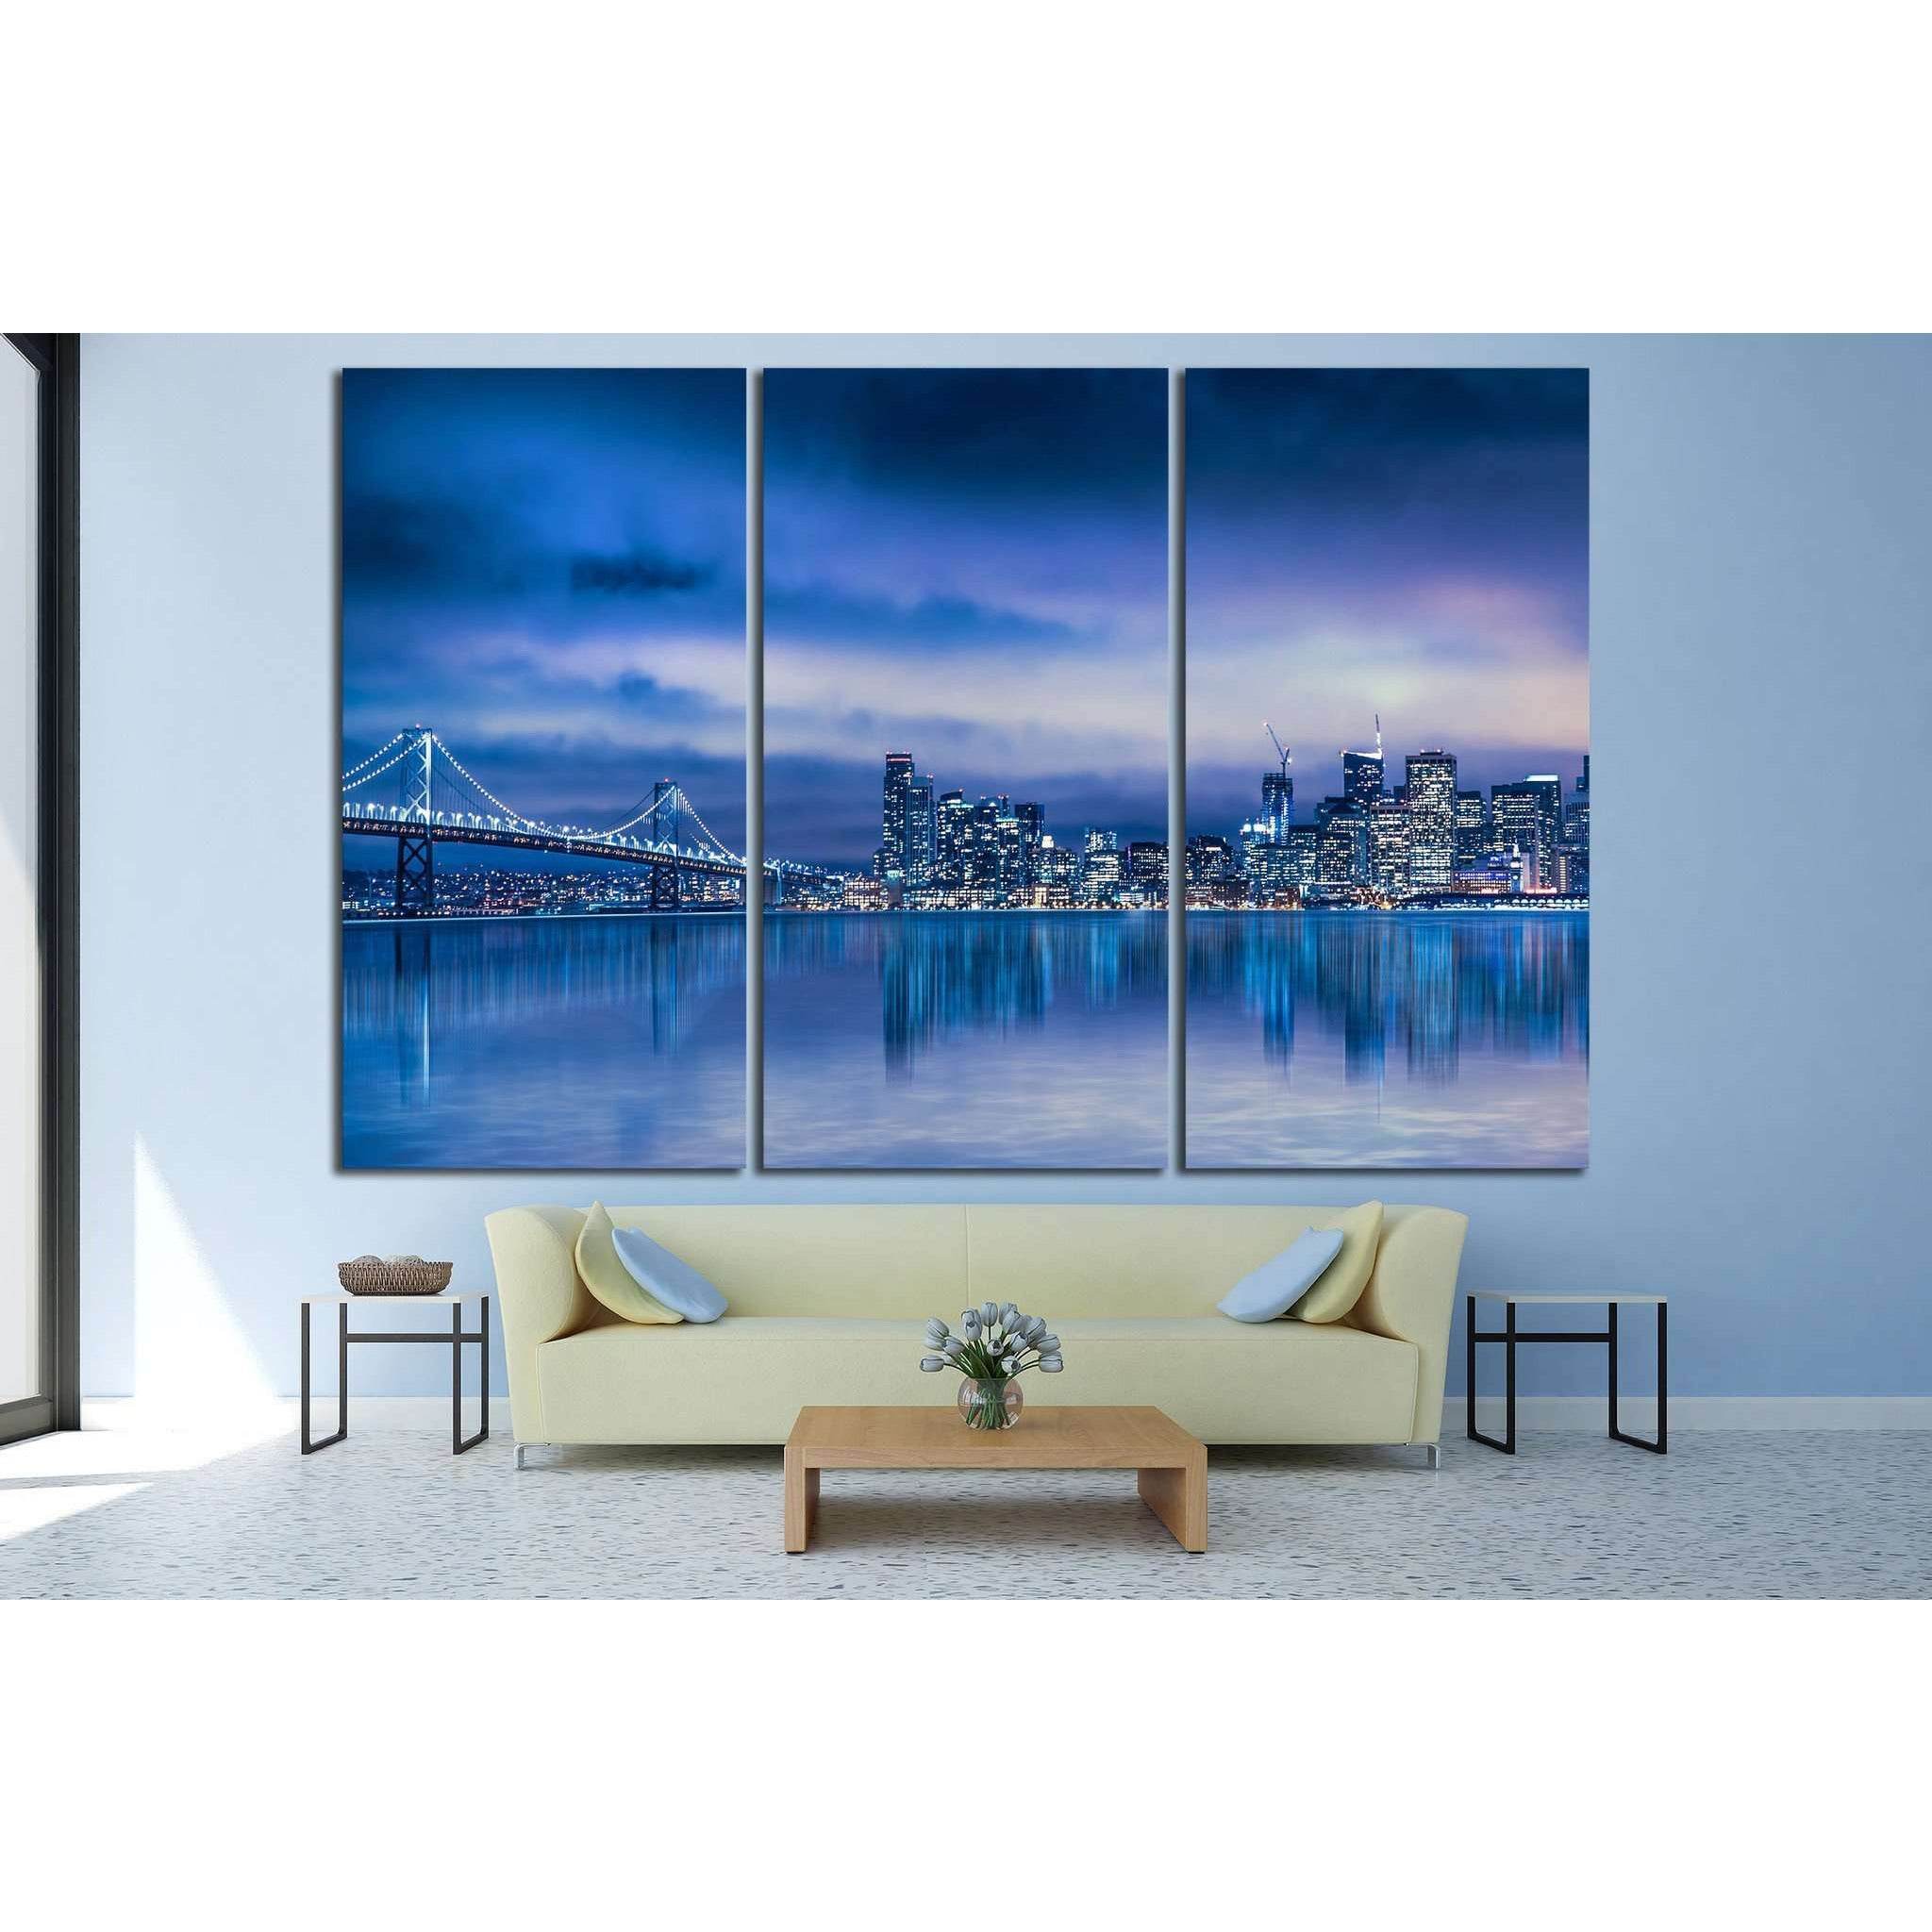 San Francisco skyline and Bay Bridge №1106 Ready to Hang Canvas Print